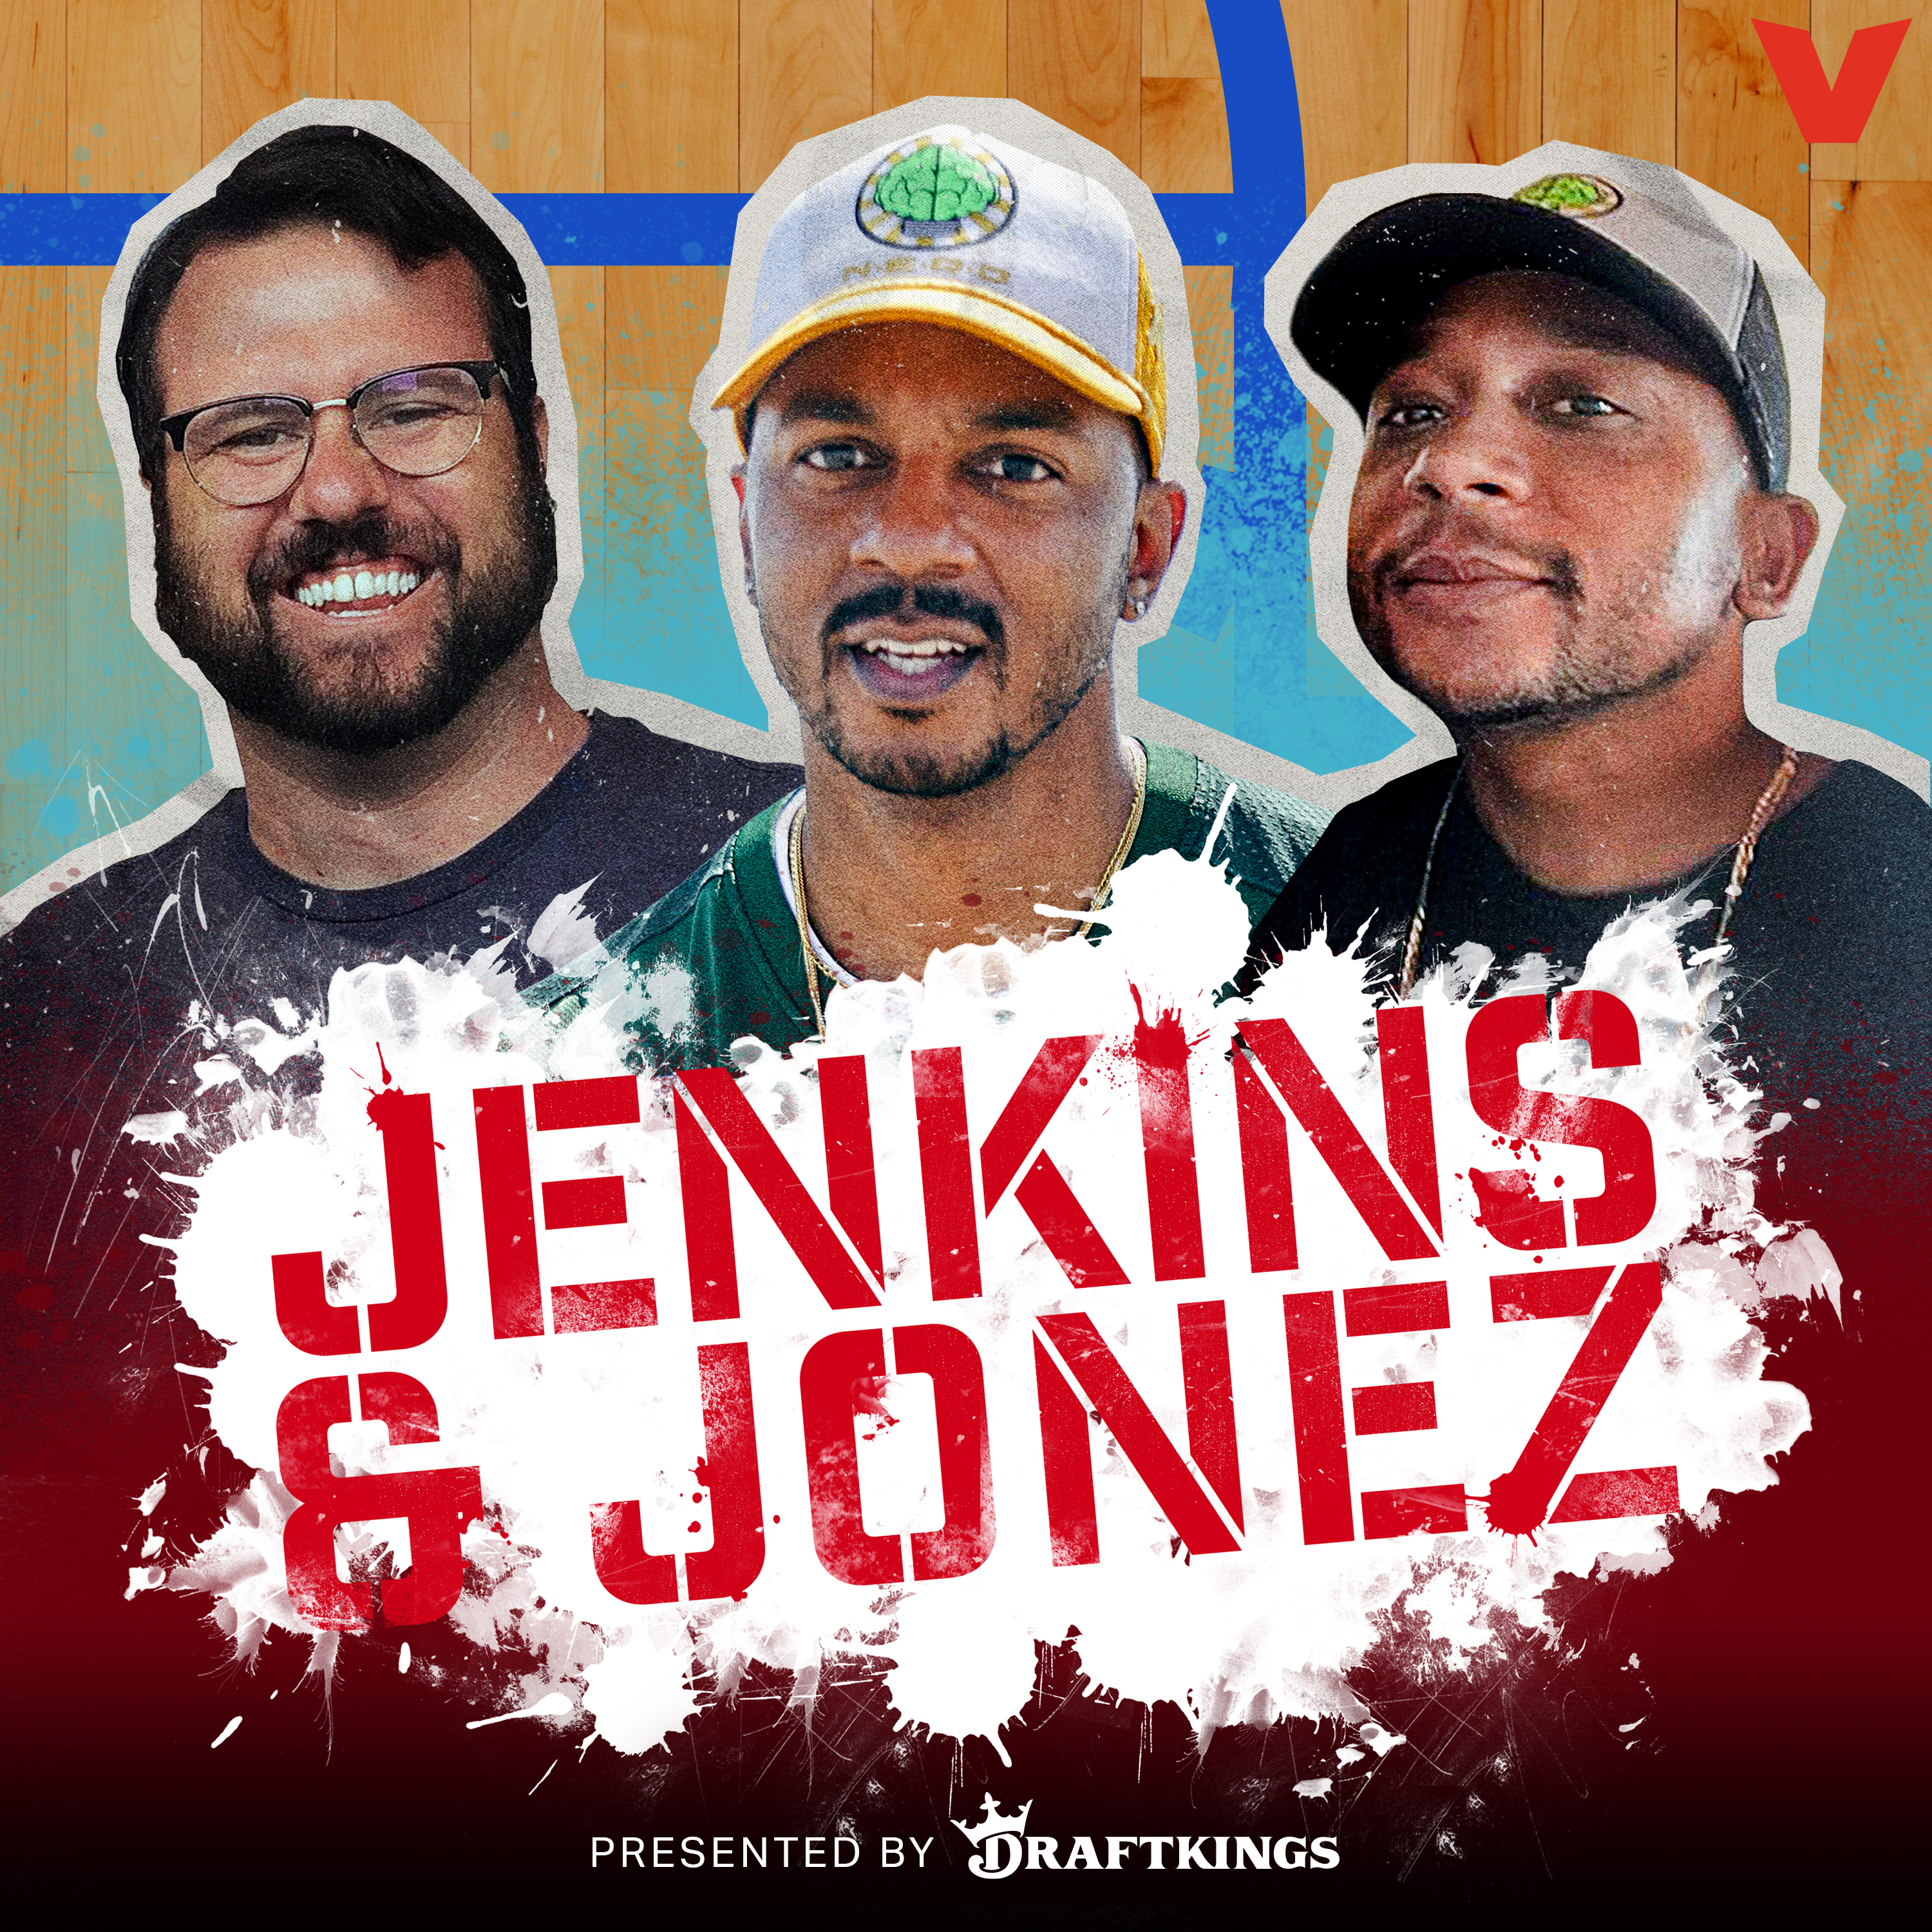 Jenkins and Jonez - New NBA Awards, Lakers/Celtics, and RG3 Said What?